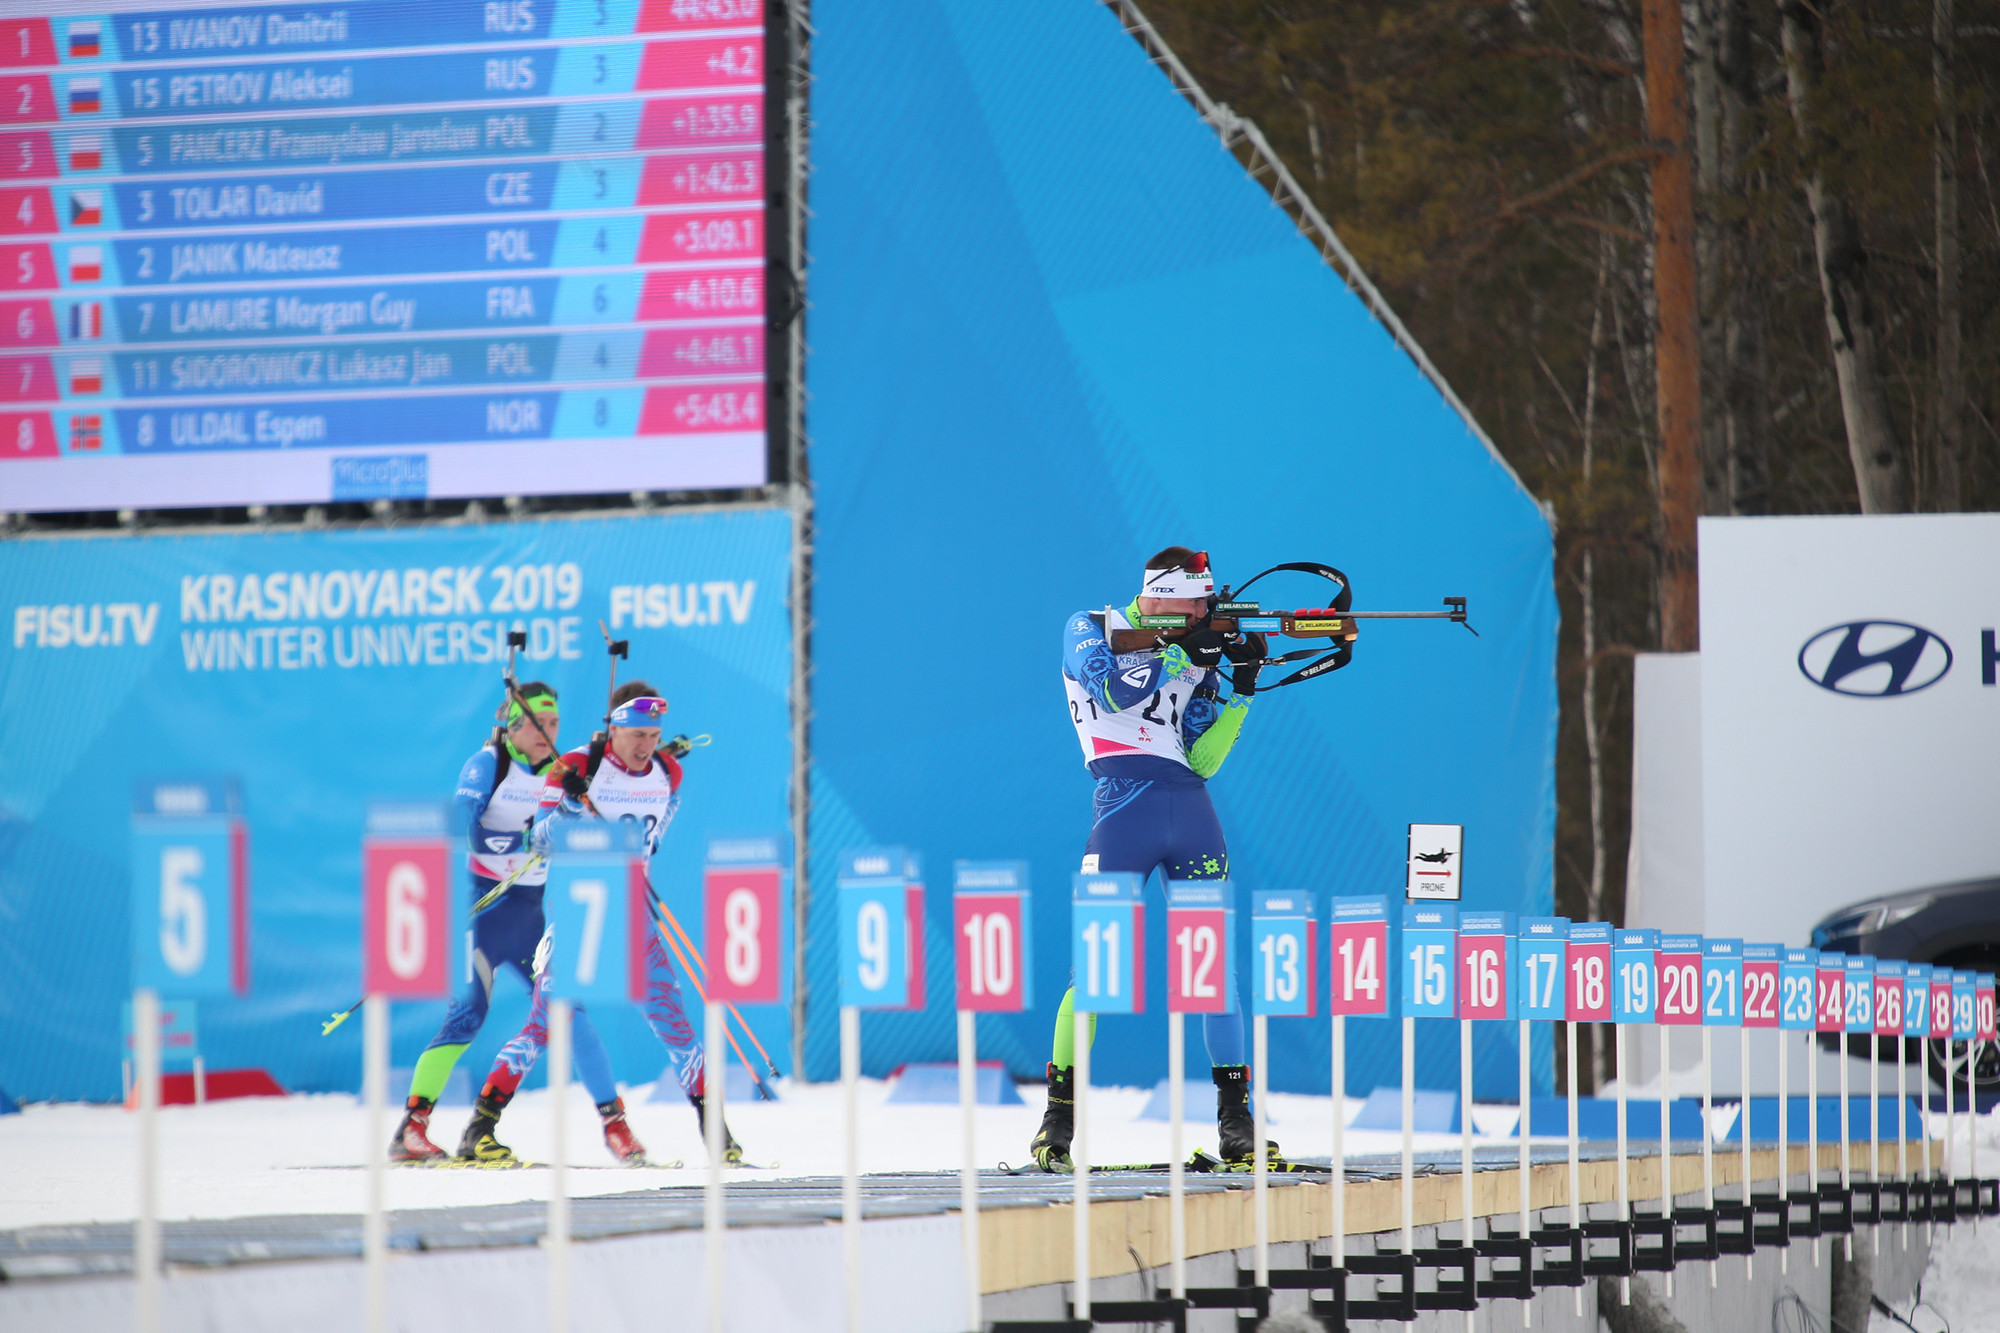 Russia won two golds in today's biathlon events at the Krasnoyarsk 2019 Winter Universiade ©Krasnoyarsk 2019